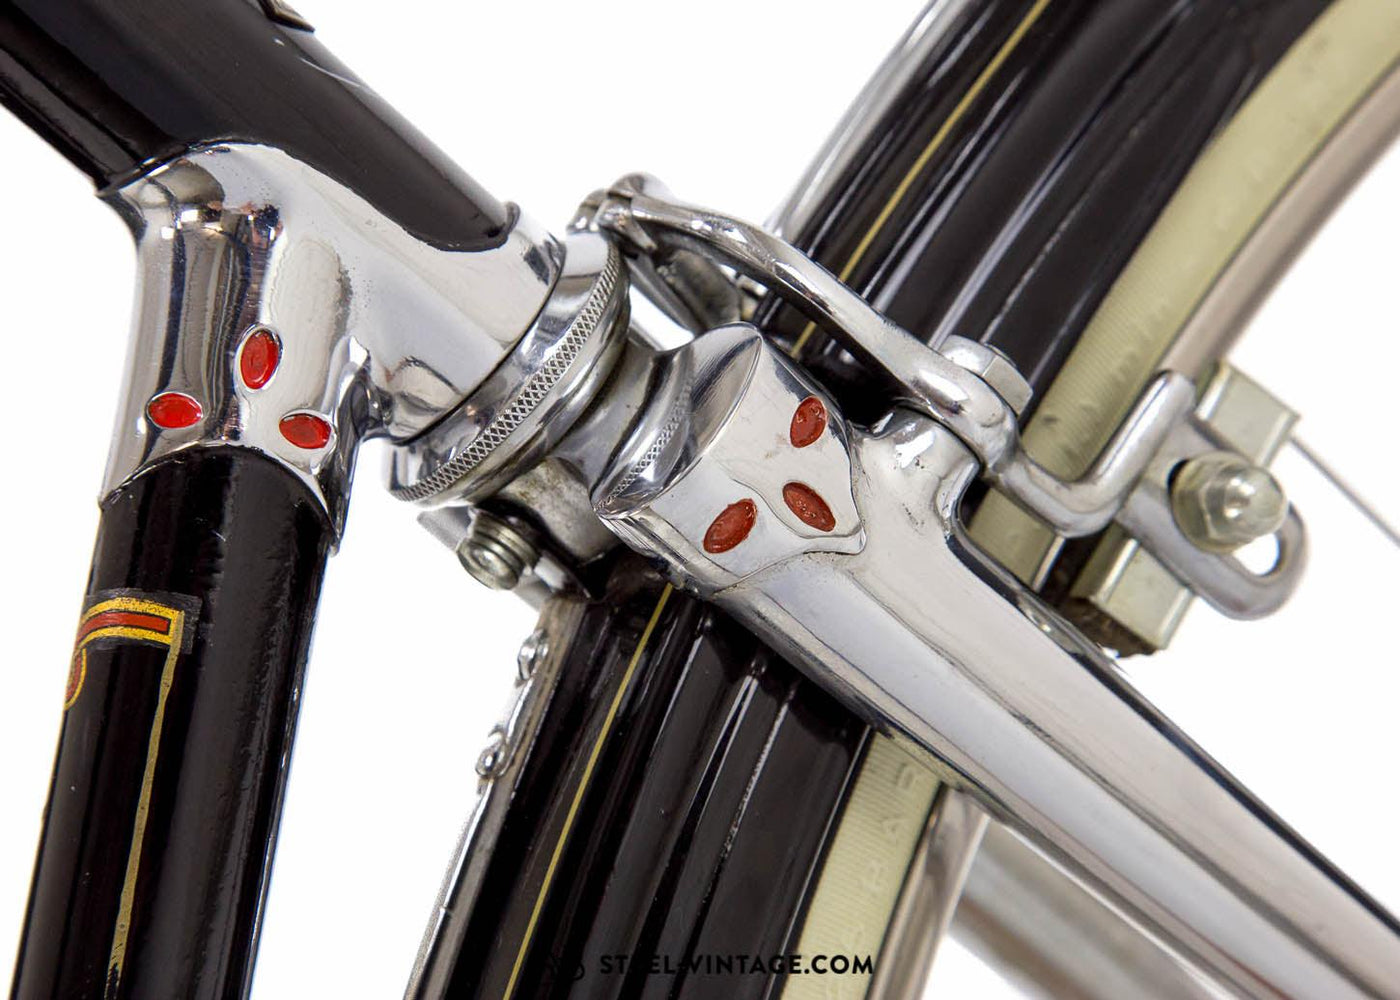 Gloria Modelo A Bis Lusso City Bike 1950 - Steel Vintage Bikes